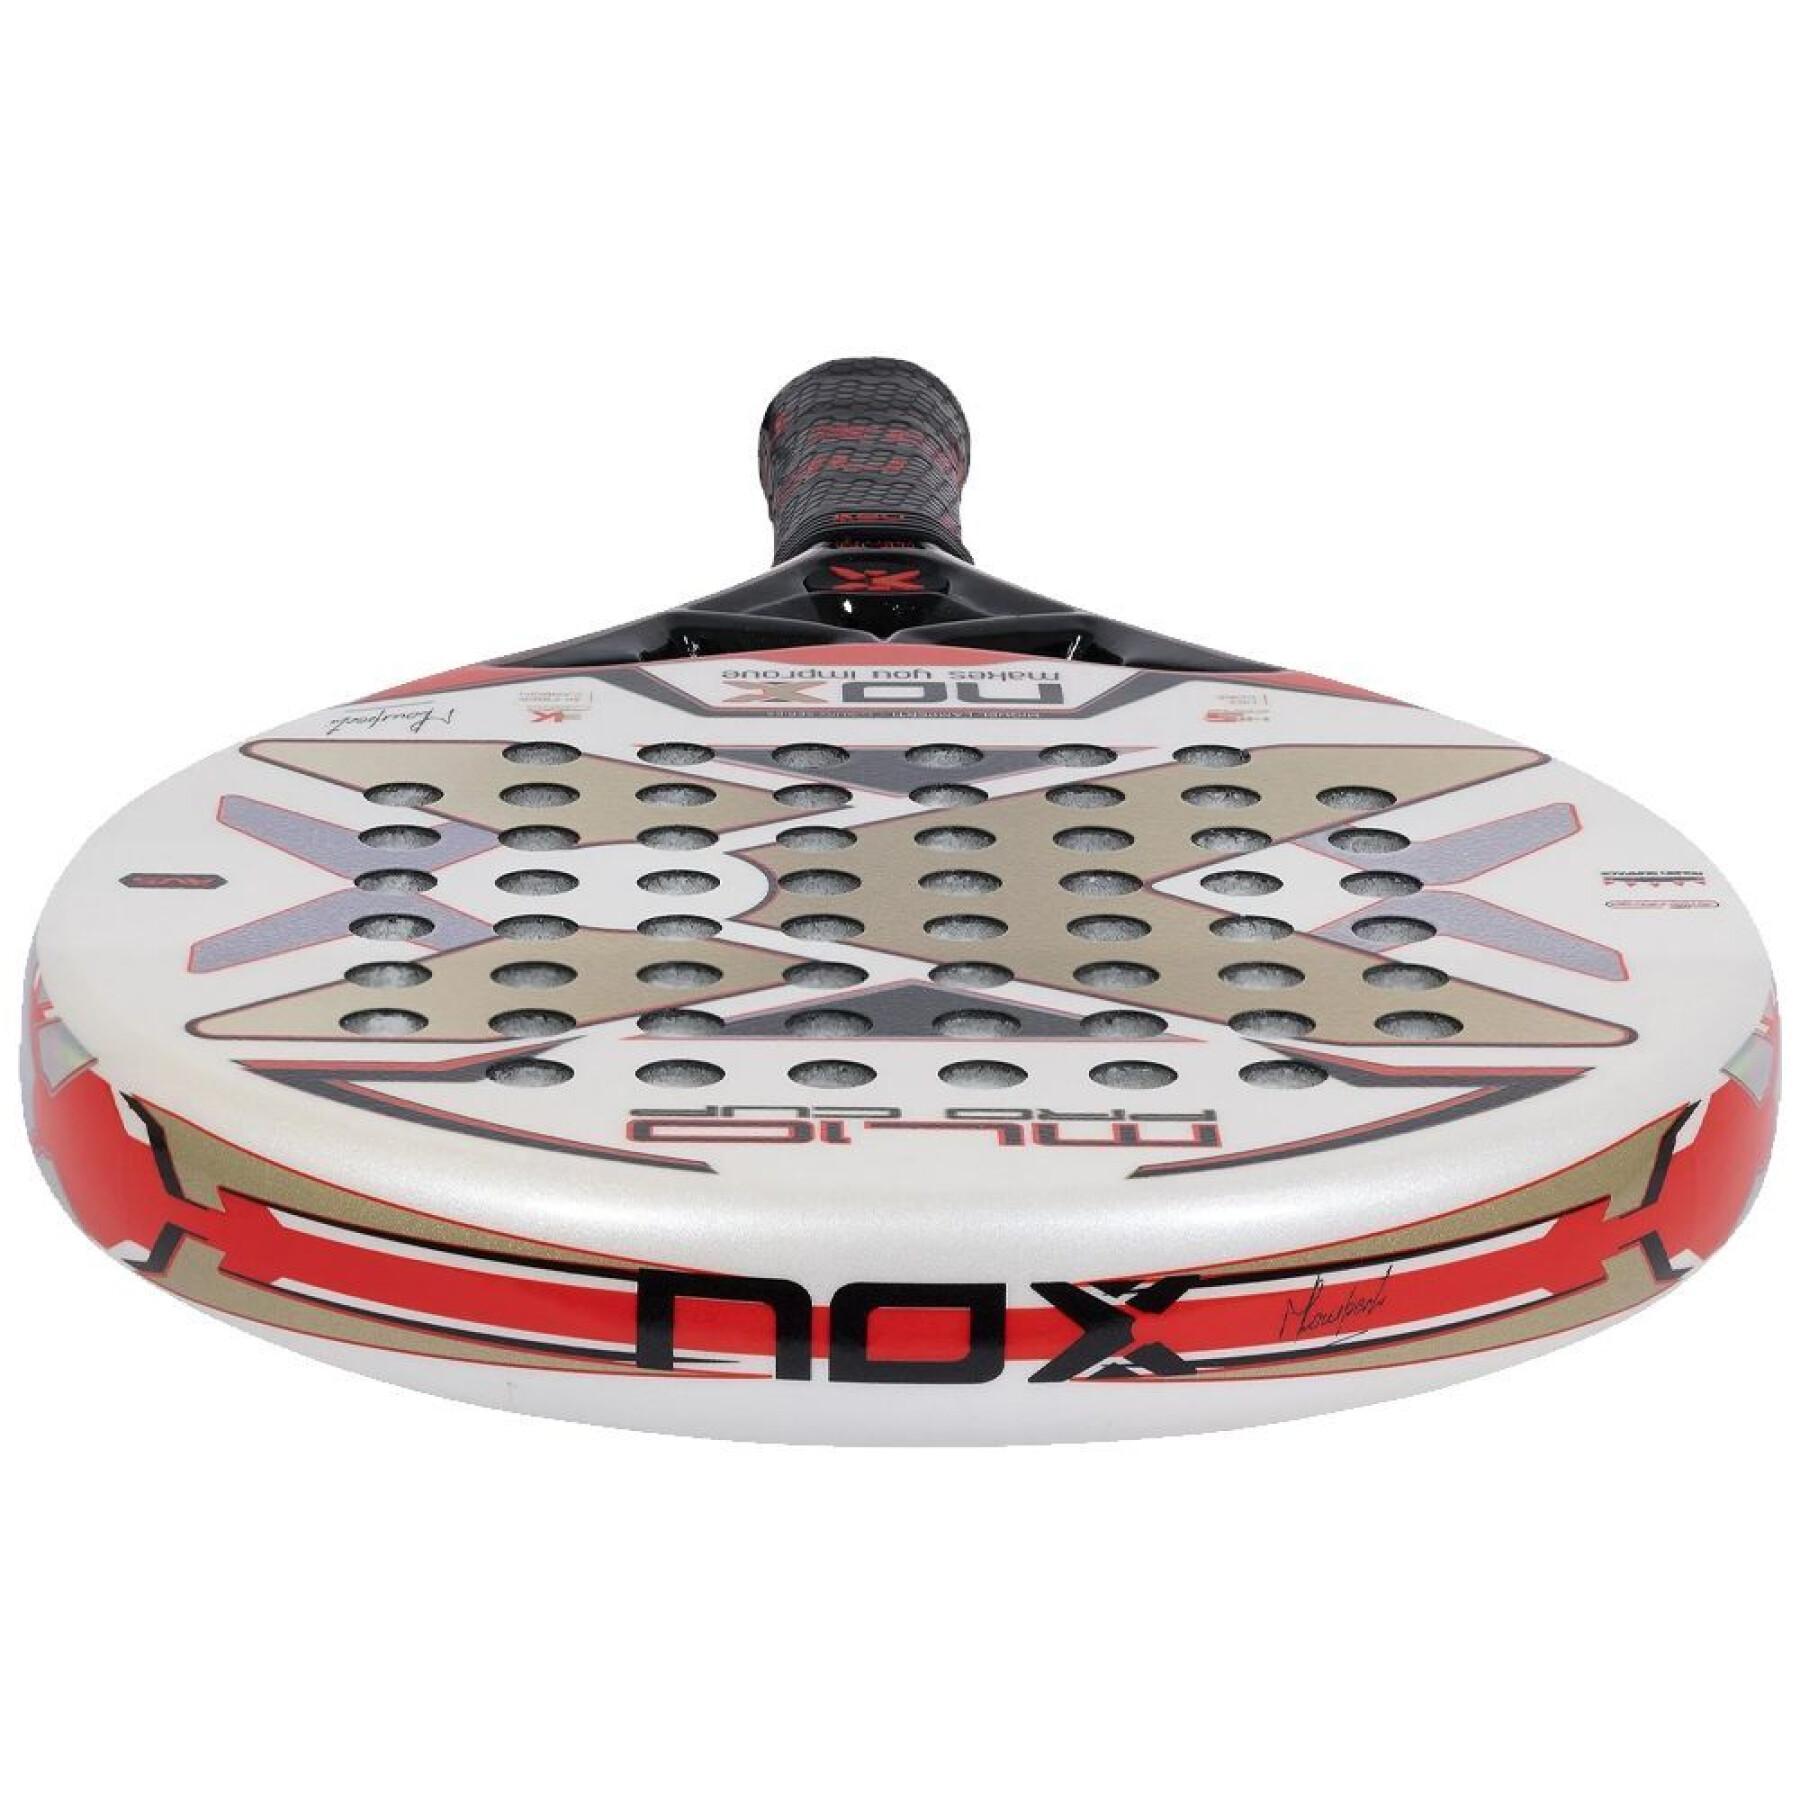 Racket from padel Nox ML10 Pro Cup Luxury Series